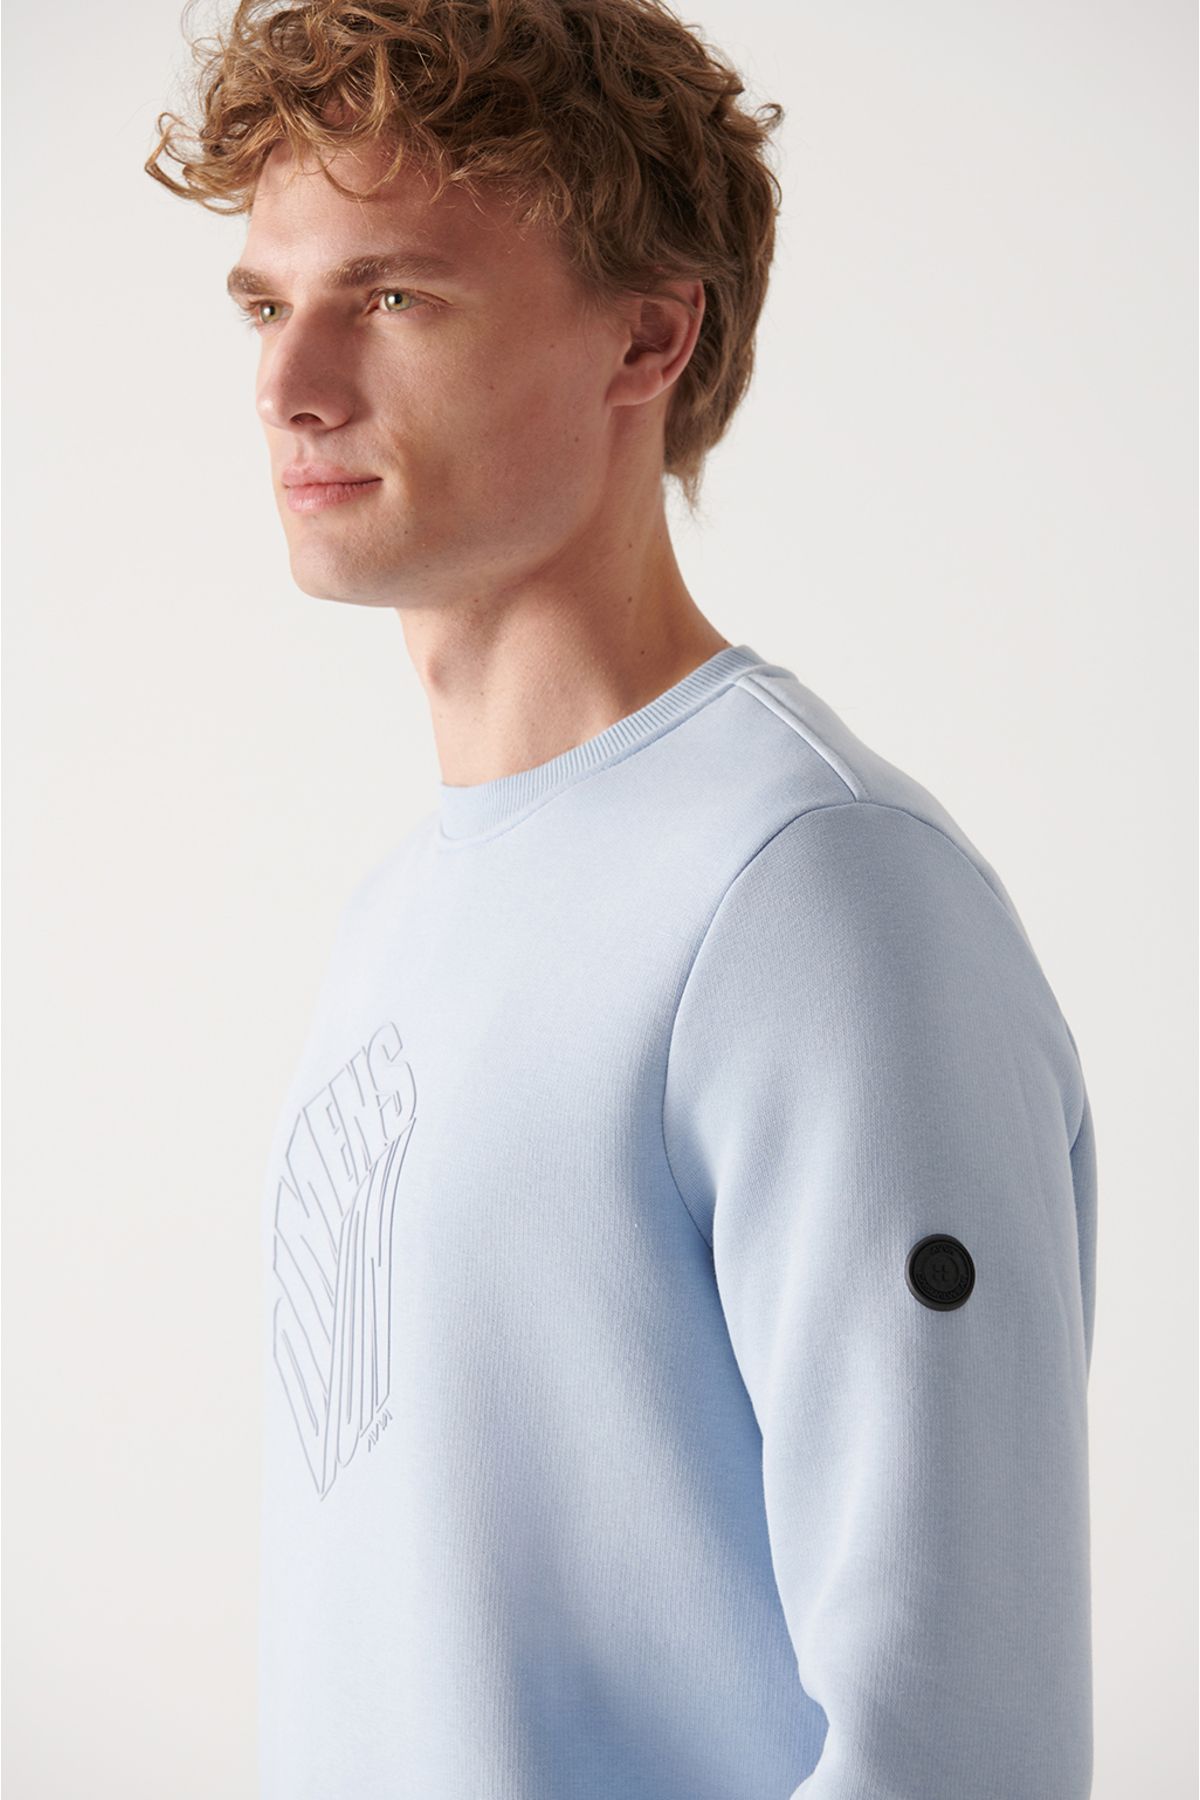 Avva گردن دوچرخه آبی روشن مردان 3 ip floard چاپ شده به طور منظم متناسب با sweatshirt